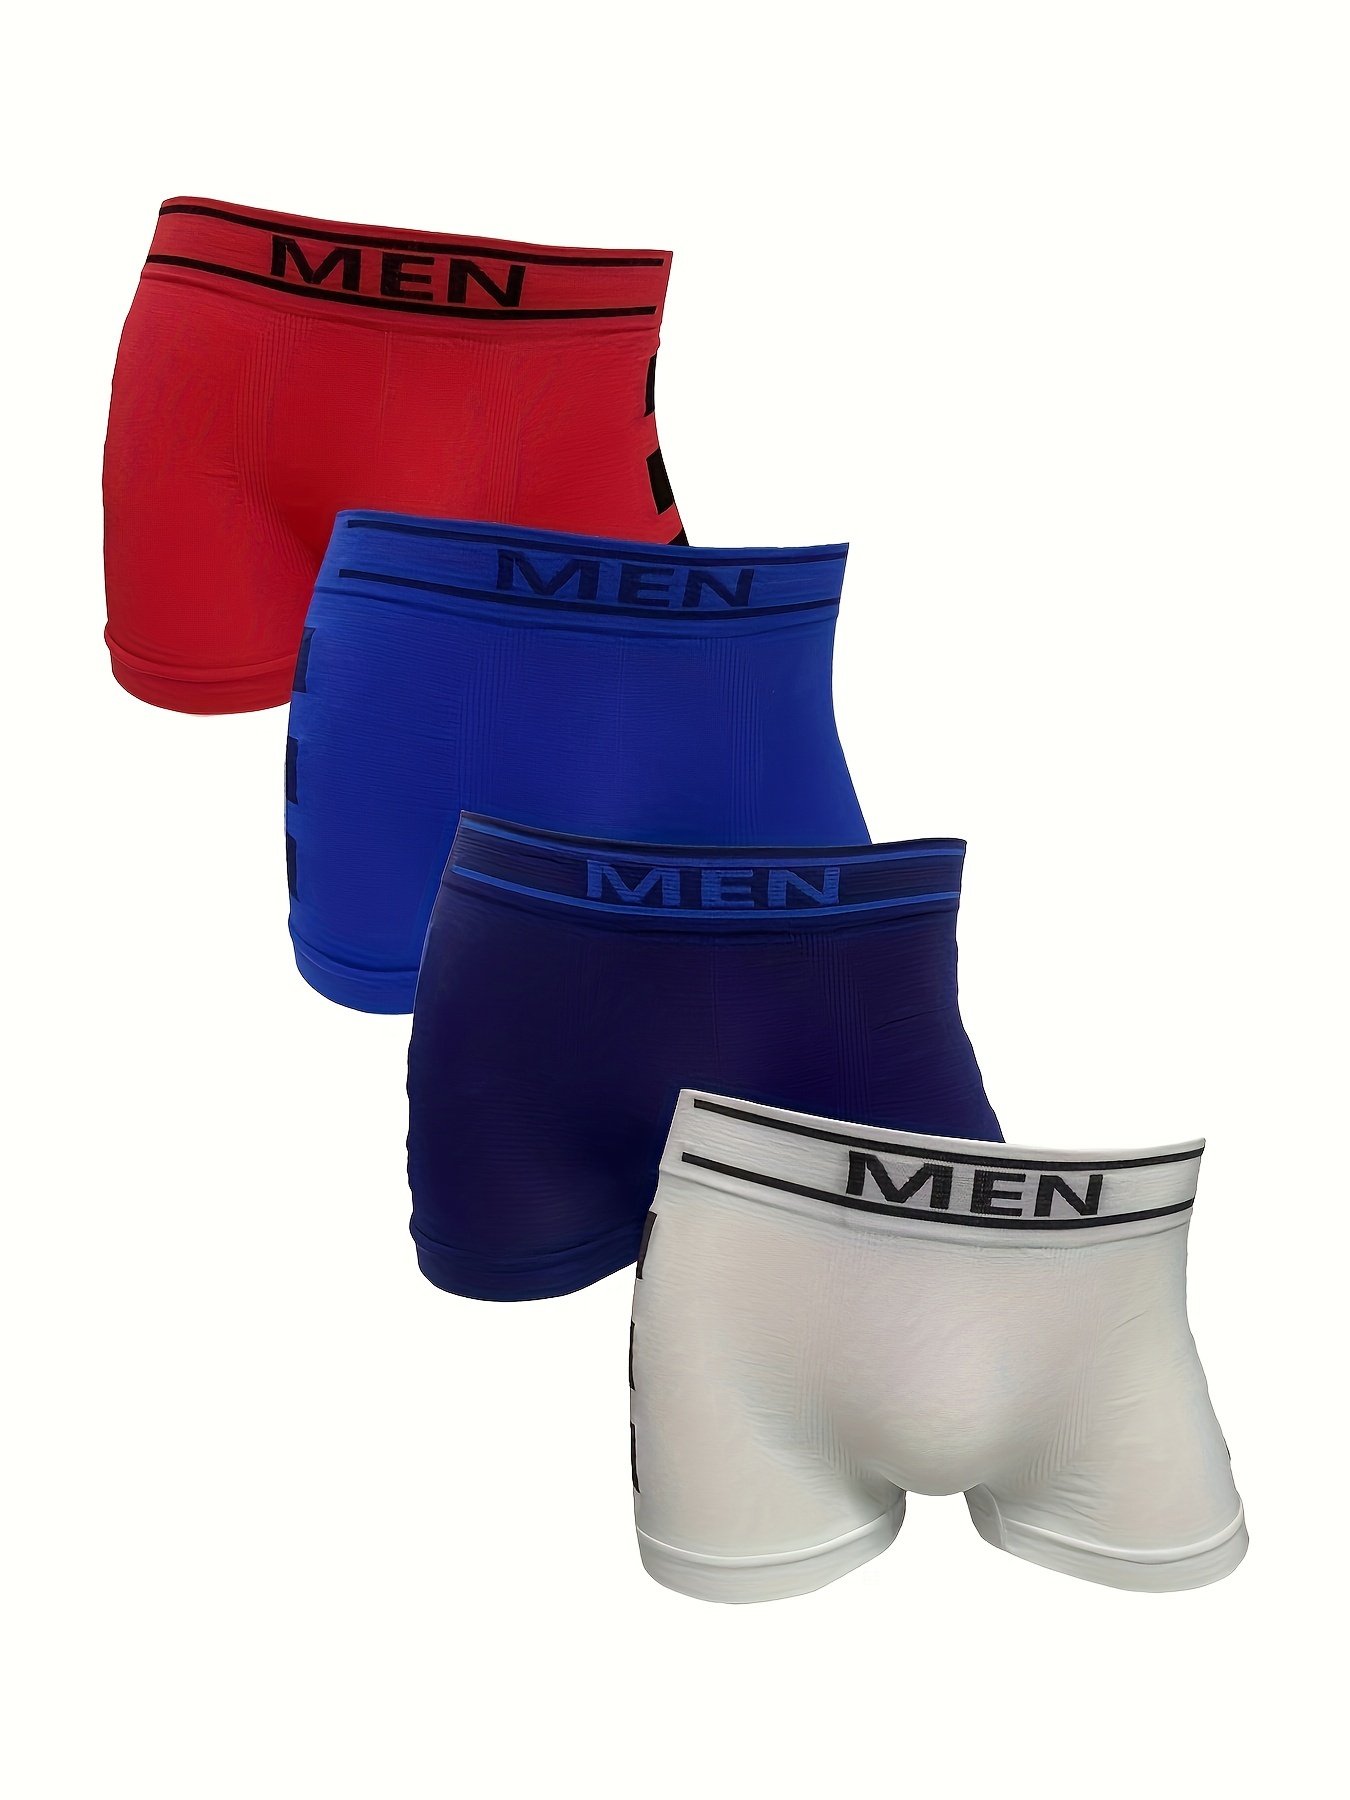 Cheap 4Pcs/lot Boys Cotton Underwear Kids Boxer Baby Children Panties  Briefs for Boy Teenager Underpants 2-12Y